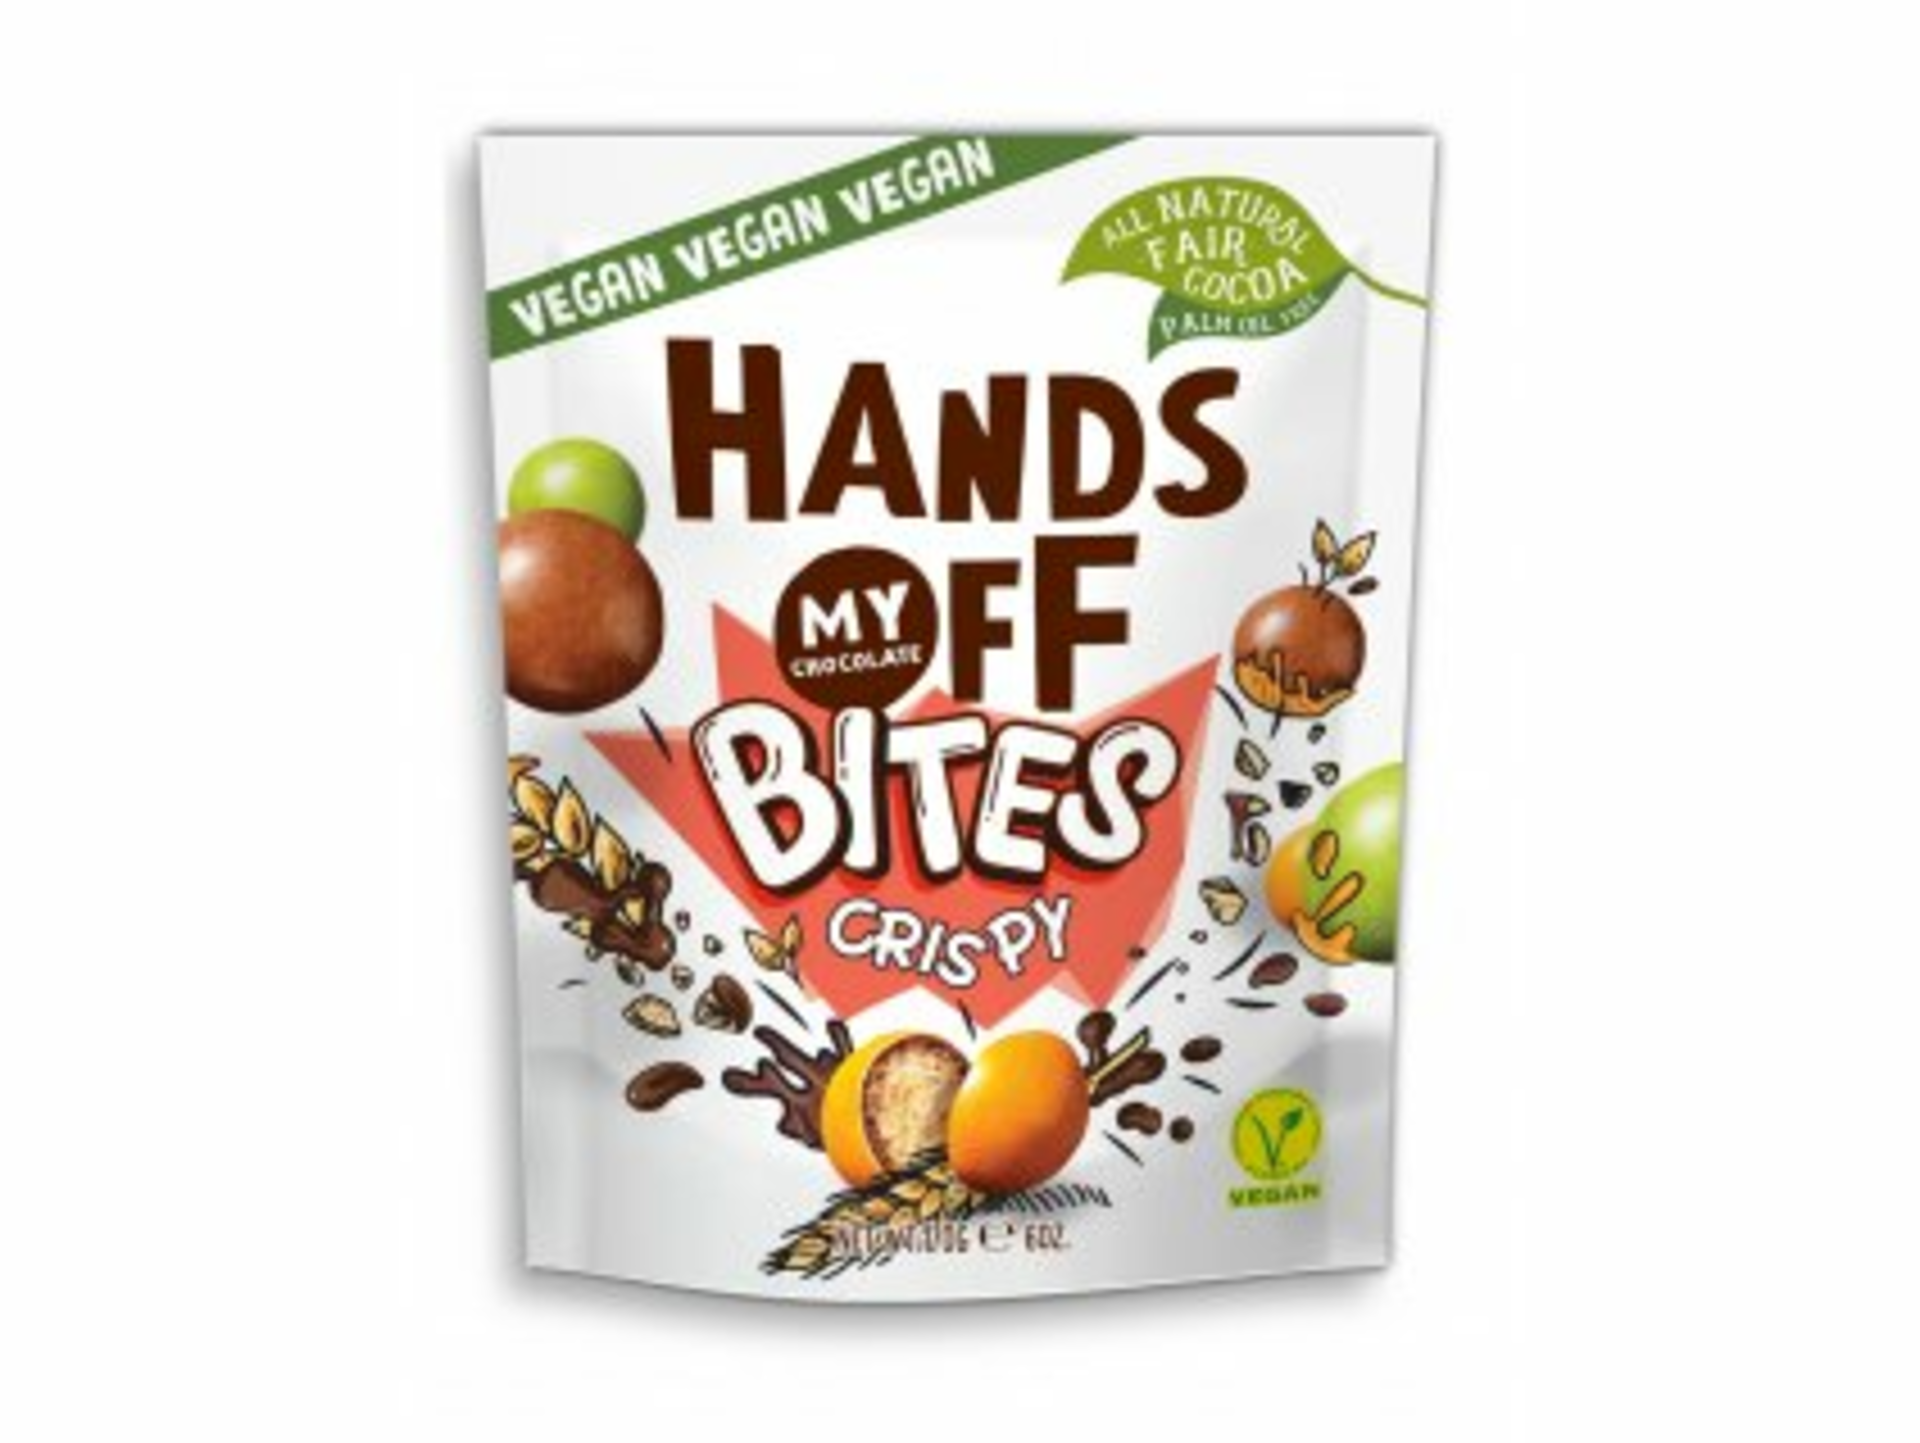 Hands off my chocolate – BITES